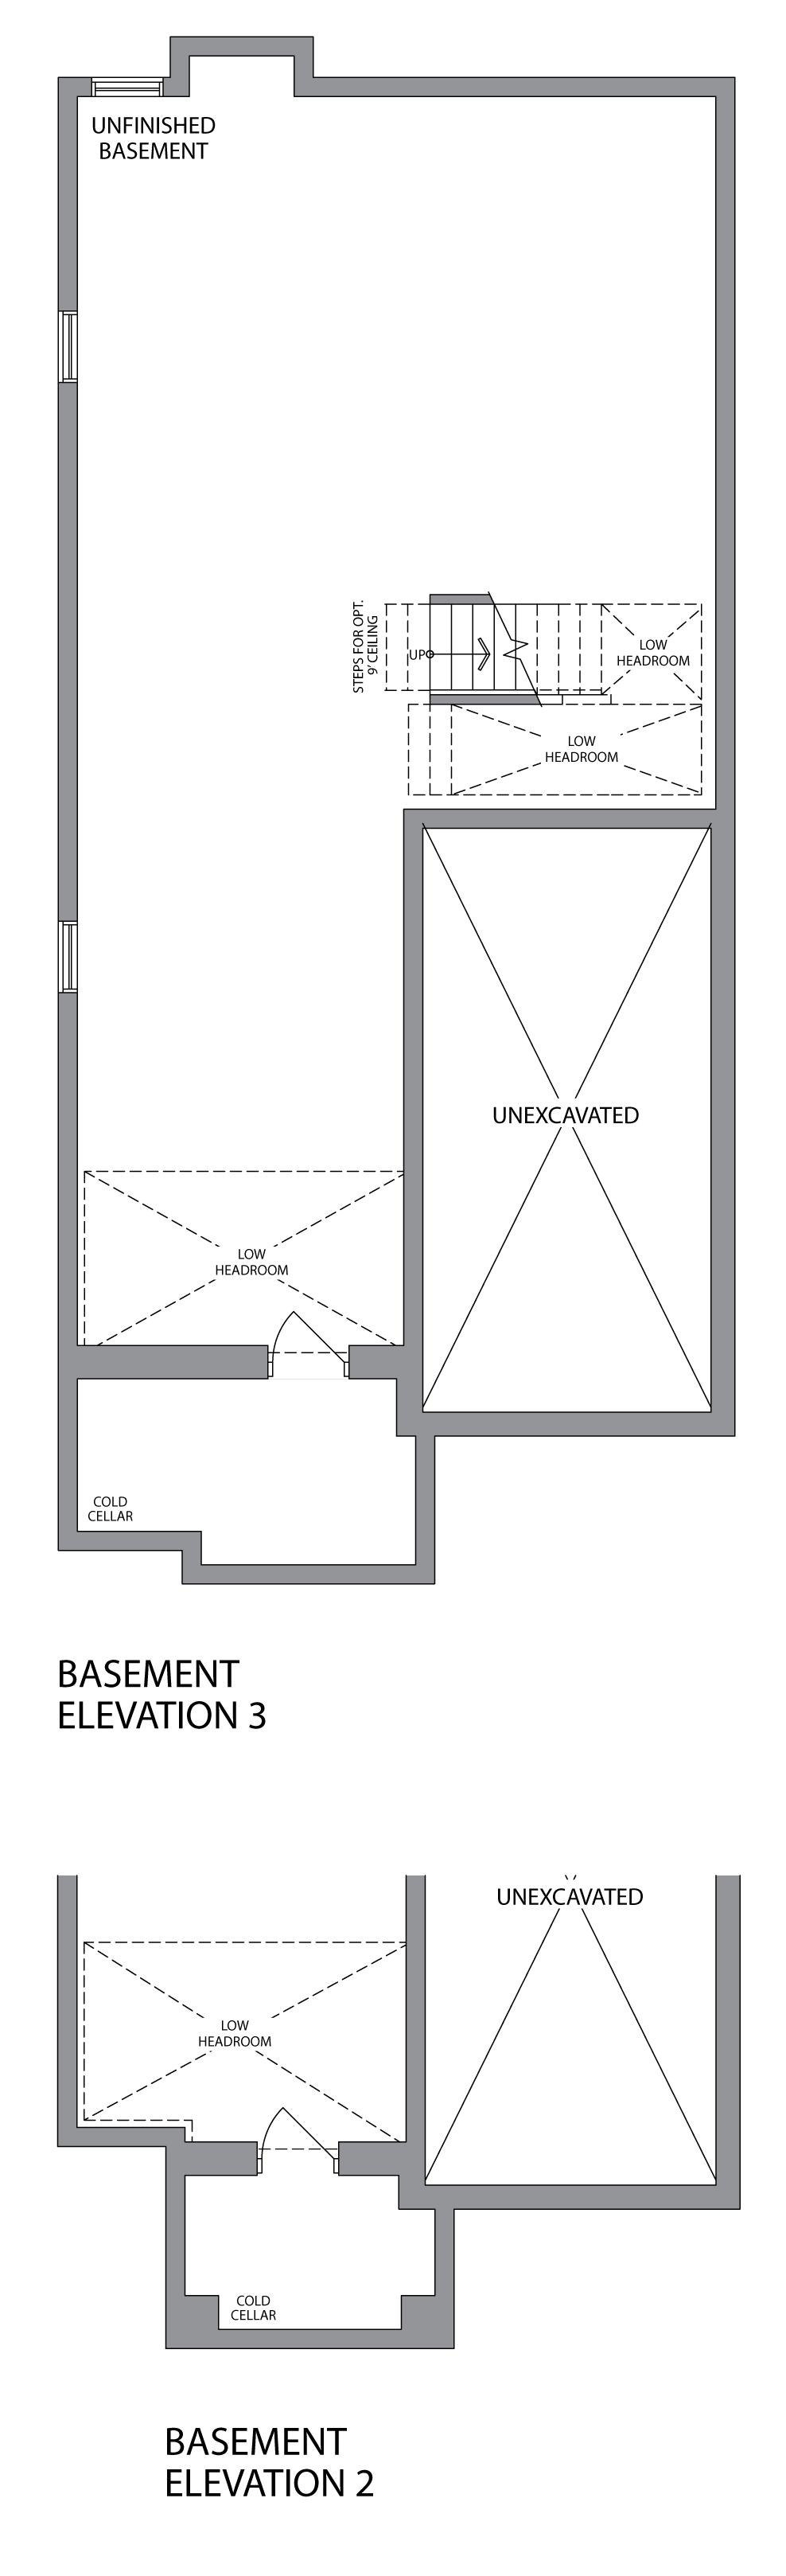 The ACADIAN Basement